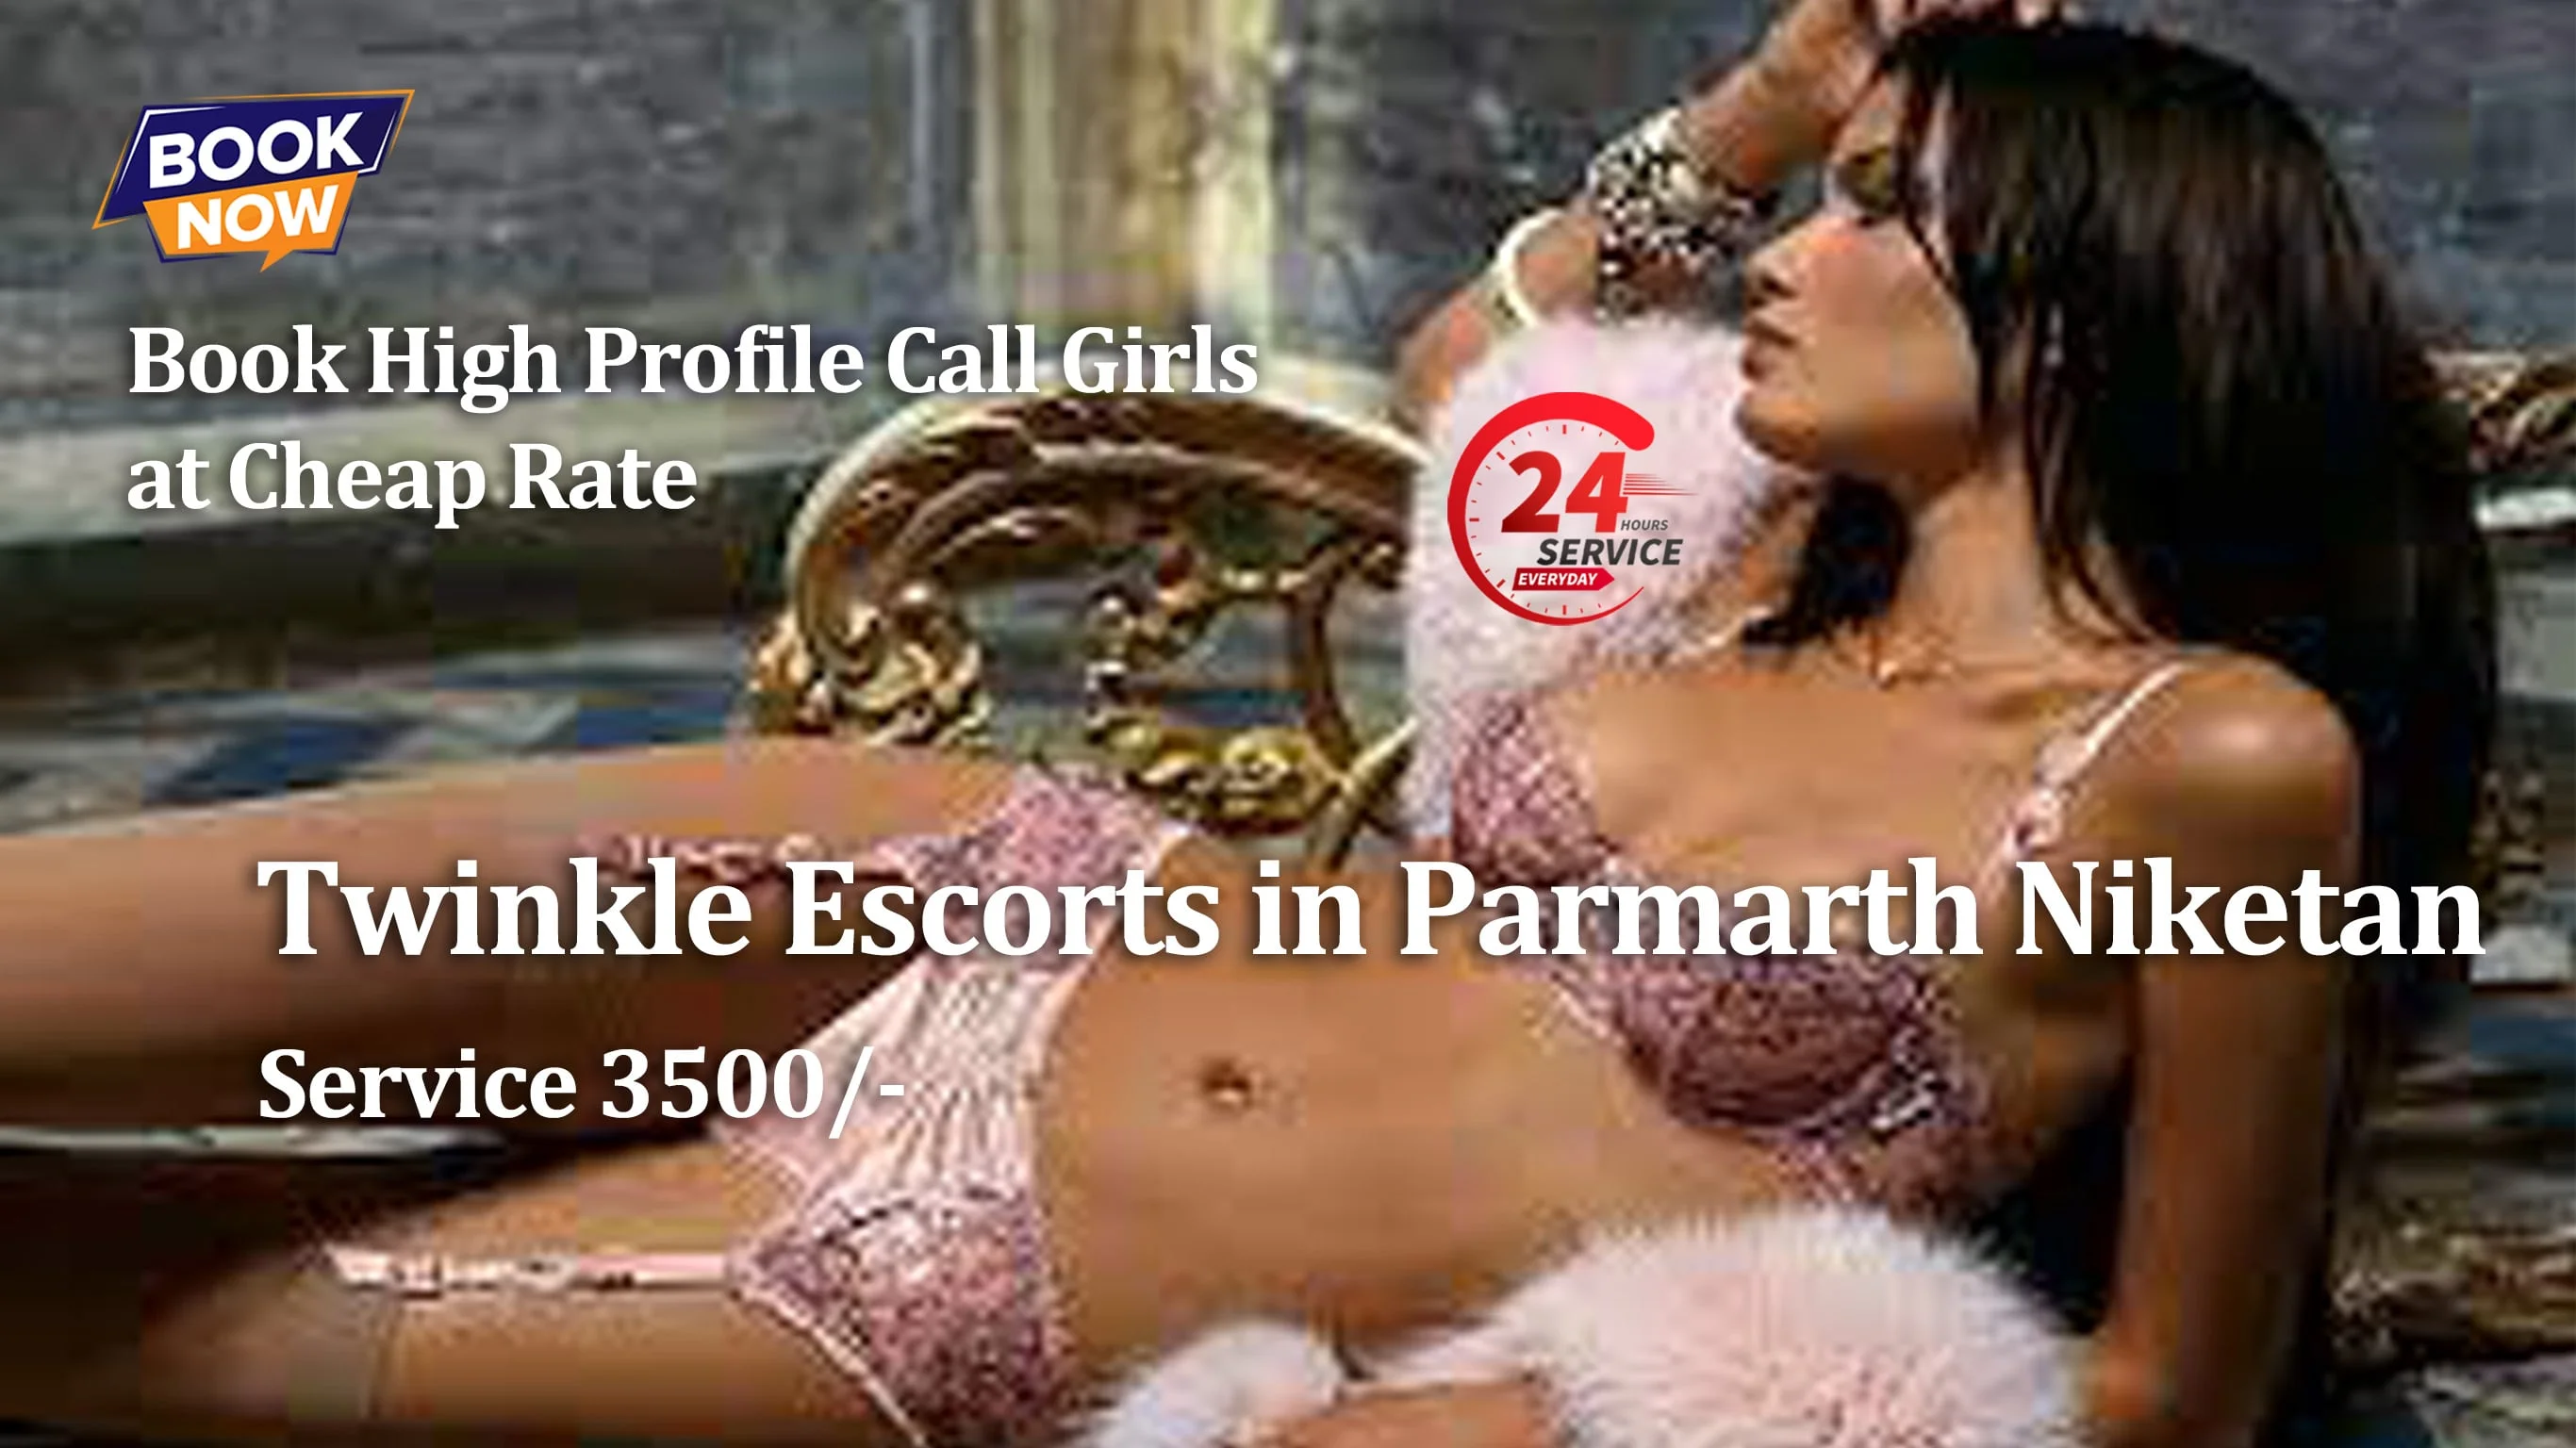 Parmarth Niketan Escort give description of twinkle escort service charges